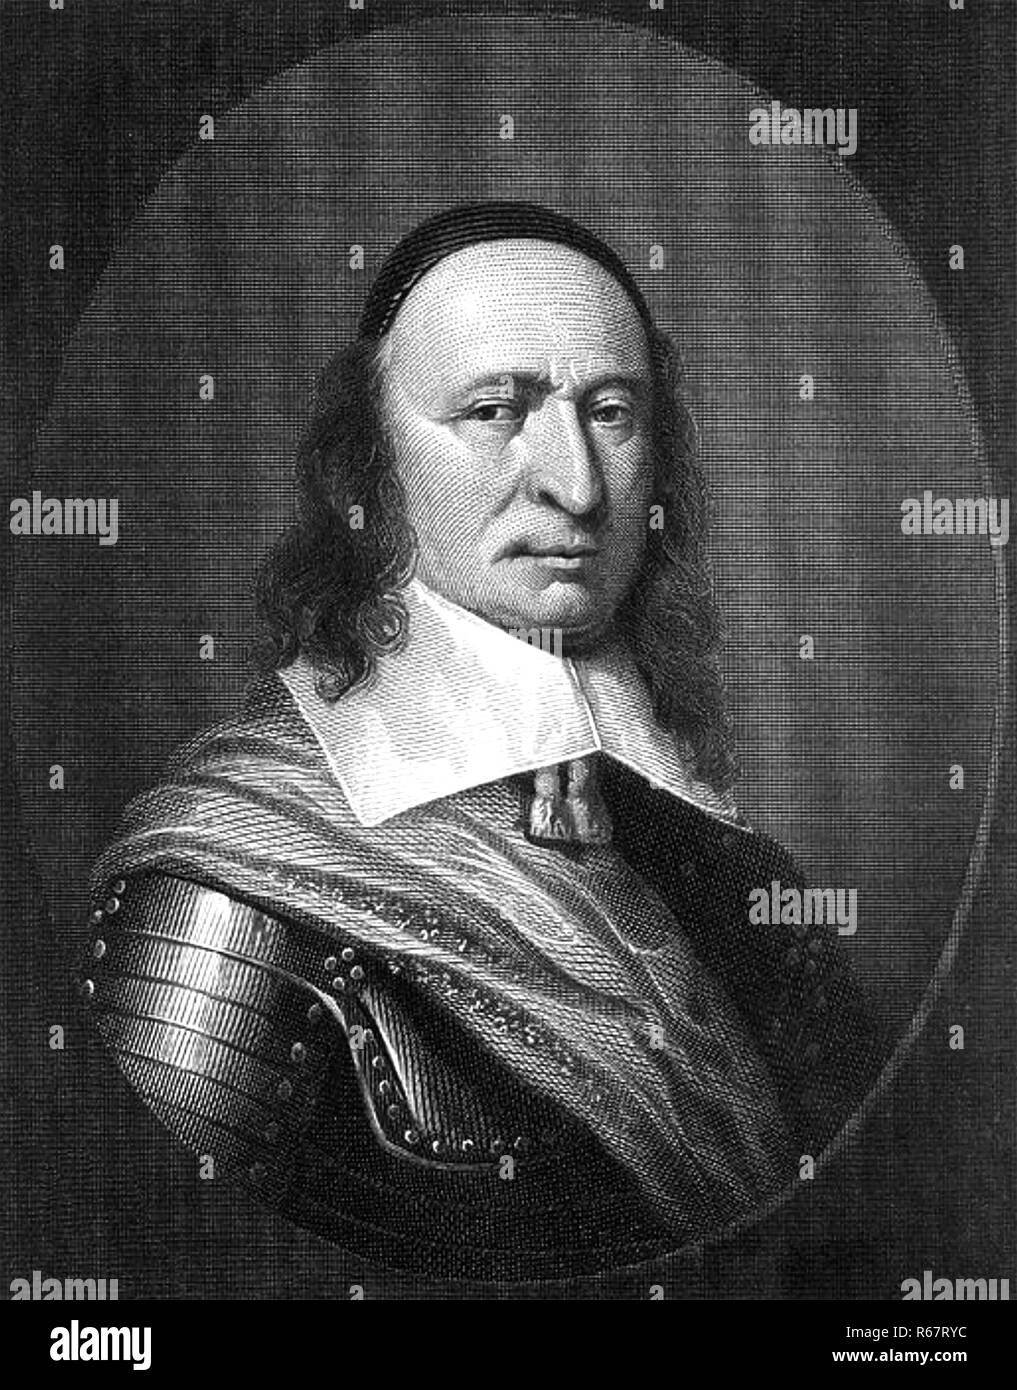 PETER STUYVESANT (1610-1672) olandese amministratore coloniale, circa 1600 Foto Stock